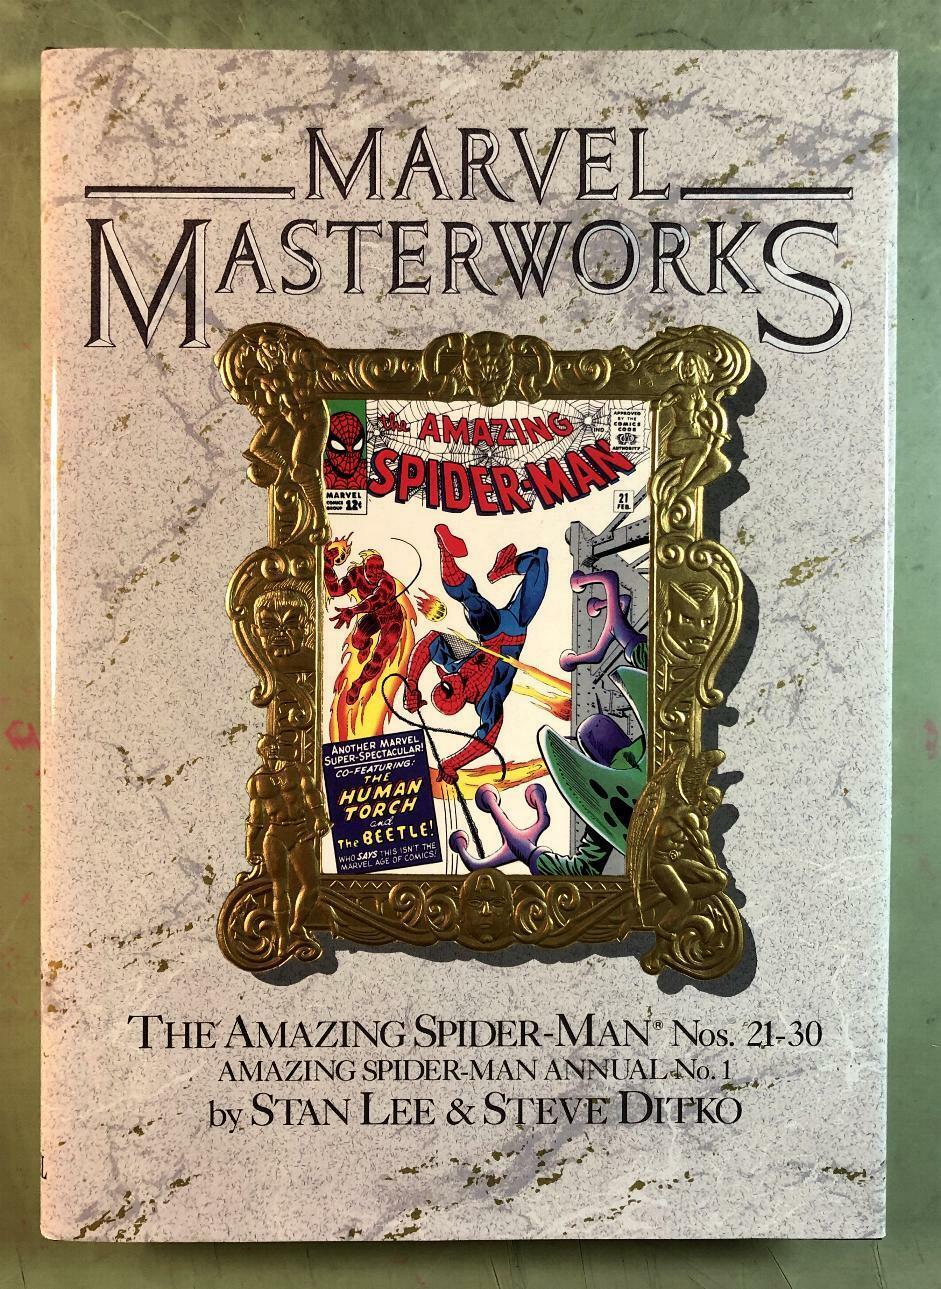 MARVEL MASTERWORKS VOLUME 10 THE AMAZING SPIDER-MAN (Issues #1-10) w/Dustjacket*